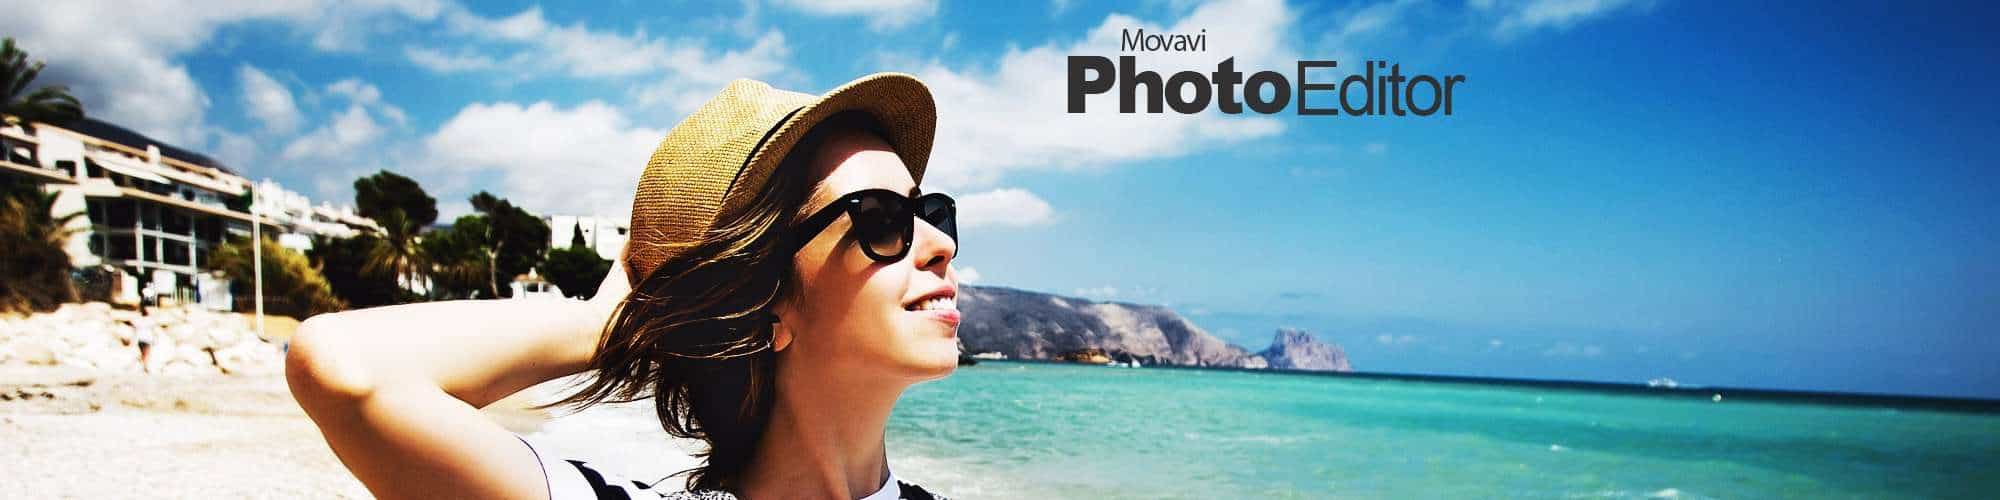 Movavi Photo Editor - Image Editing Made Simple! - 6